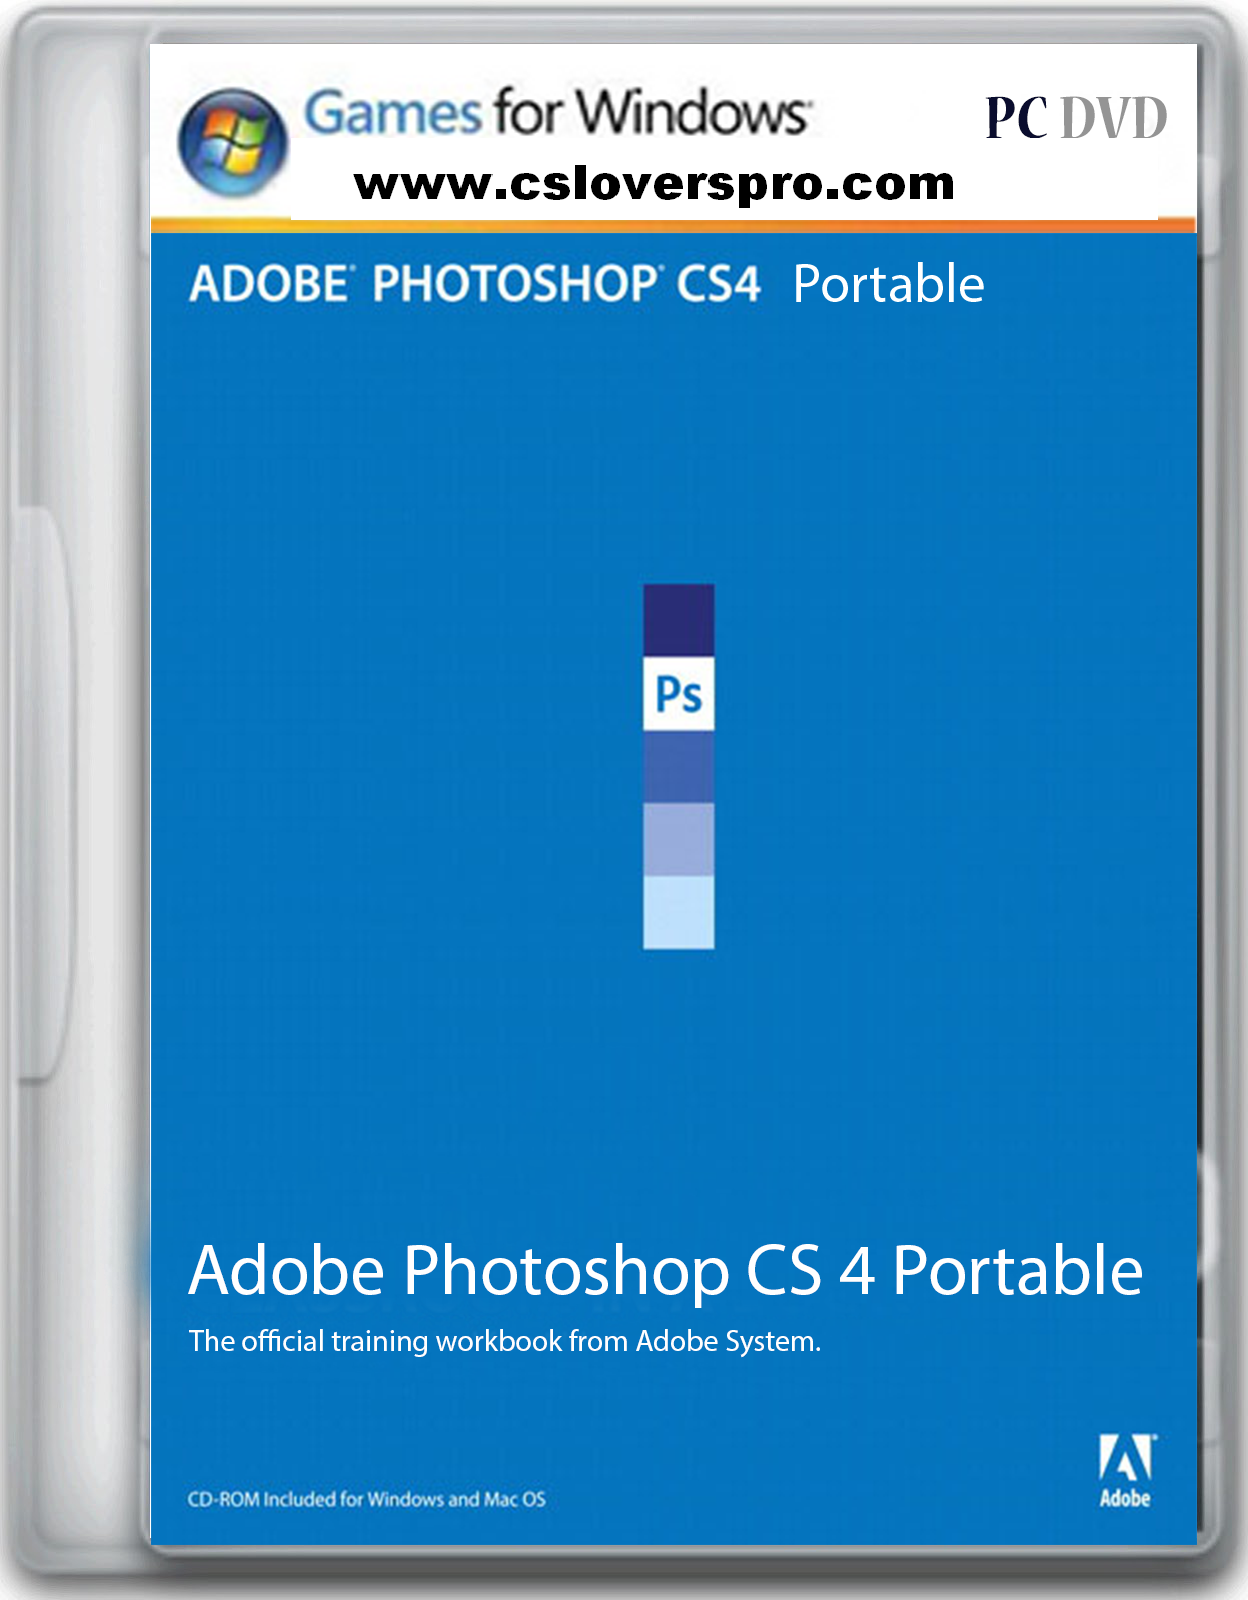 Adobe Photoshop  CS4  Portable Full Version Free Download 